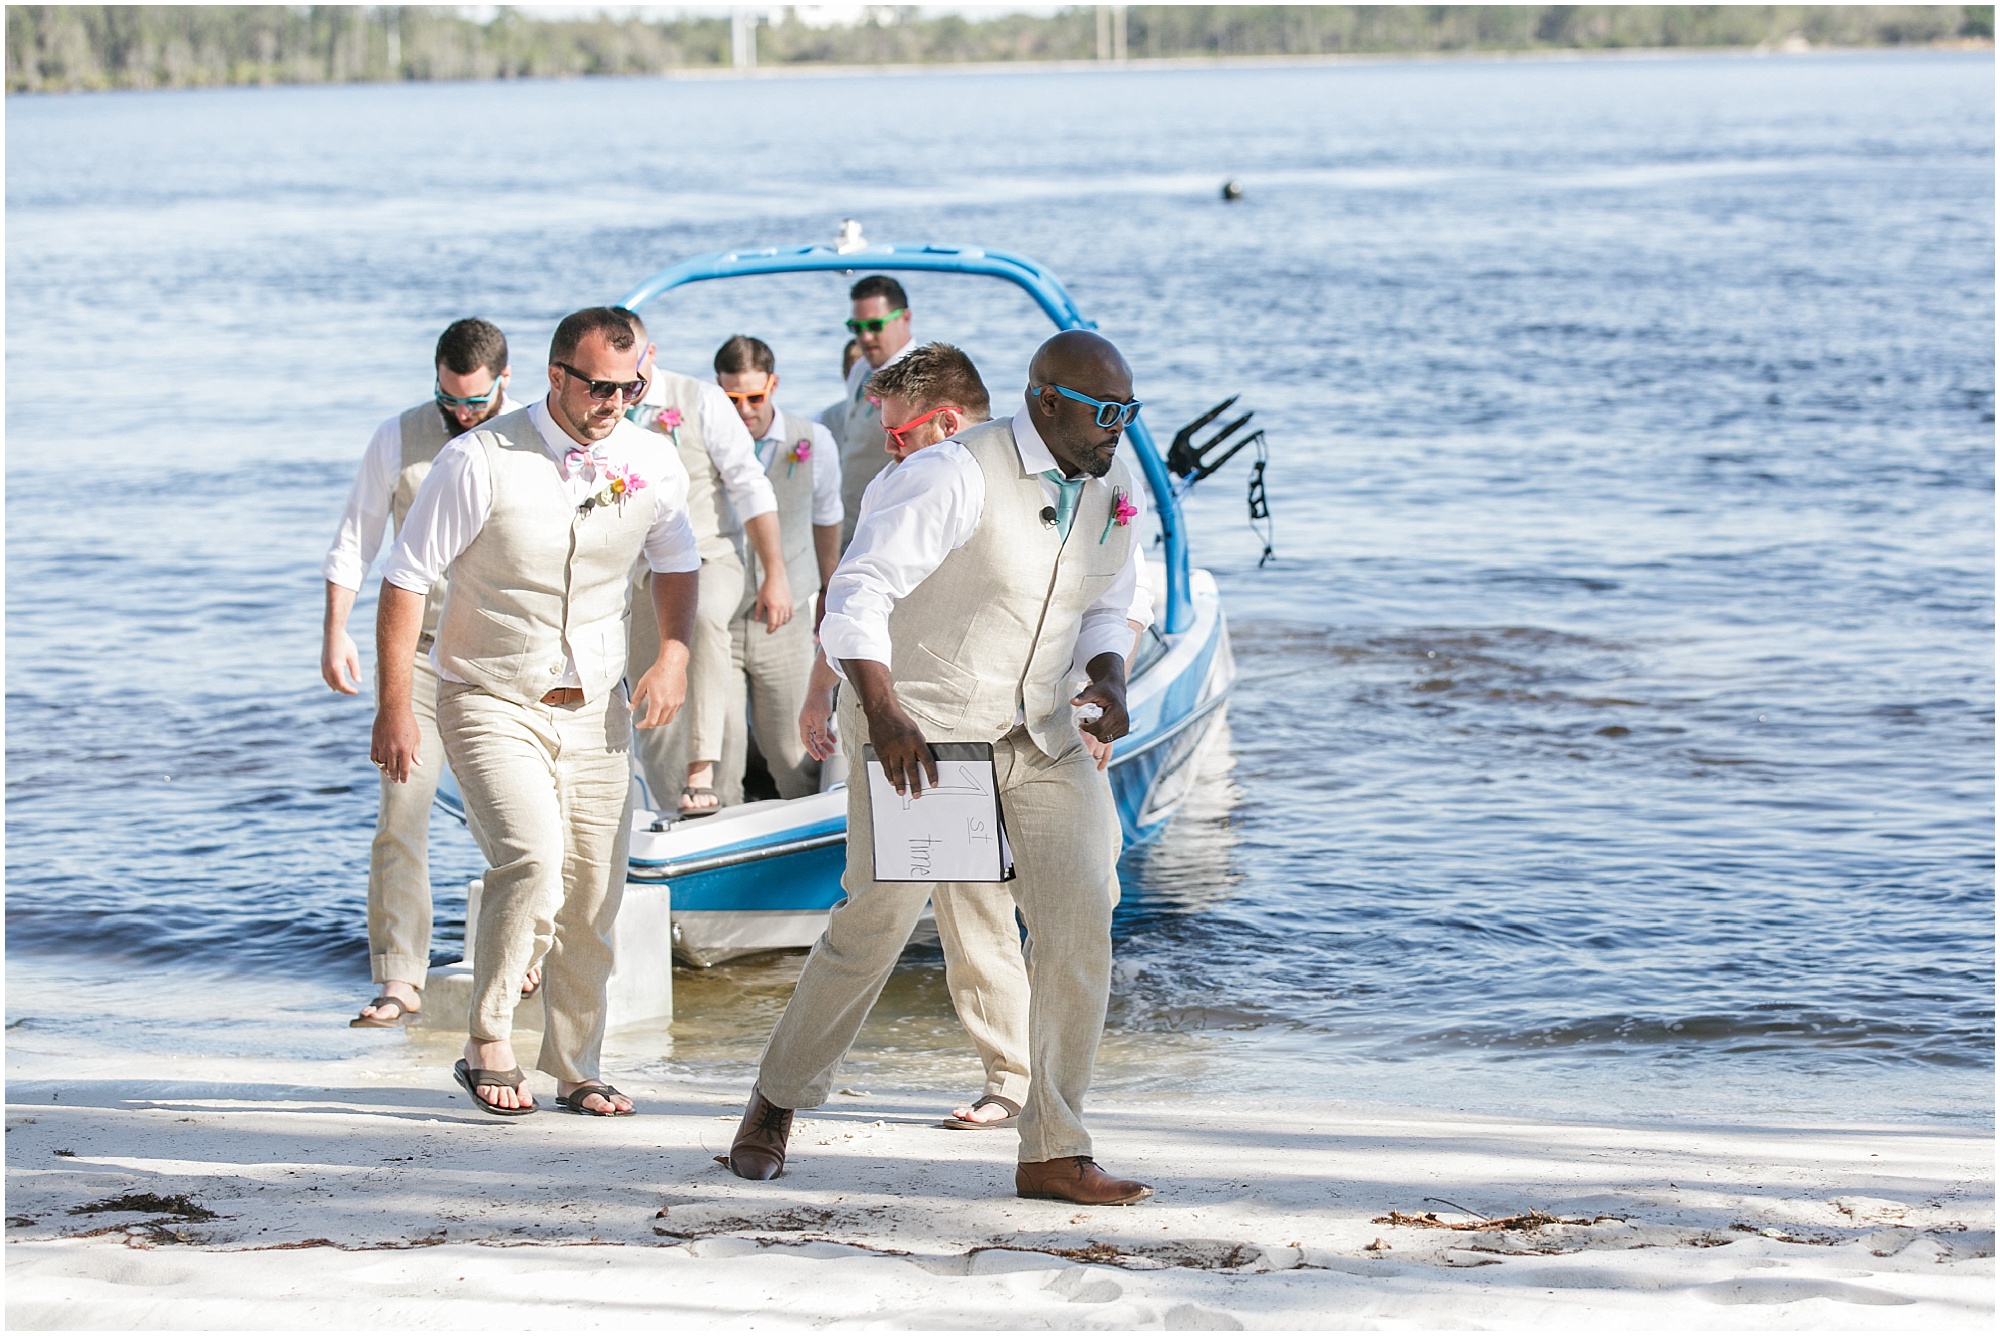 Groomsmen exiting boat on shoreline. 